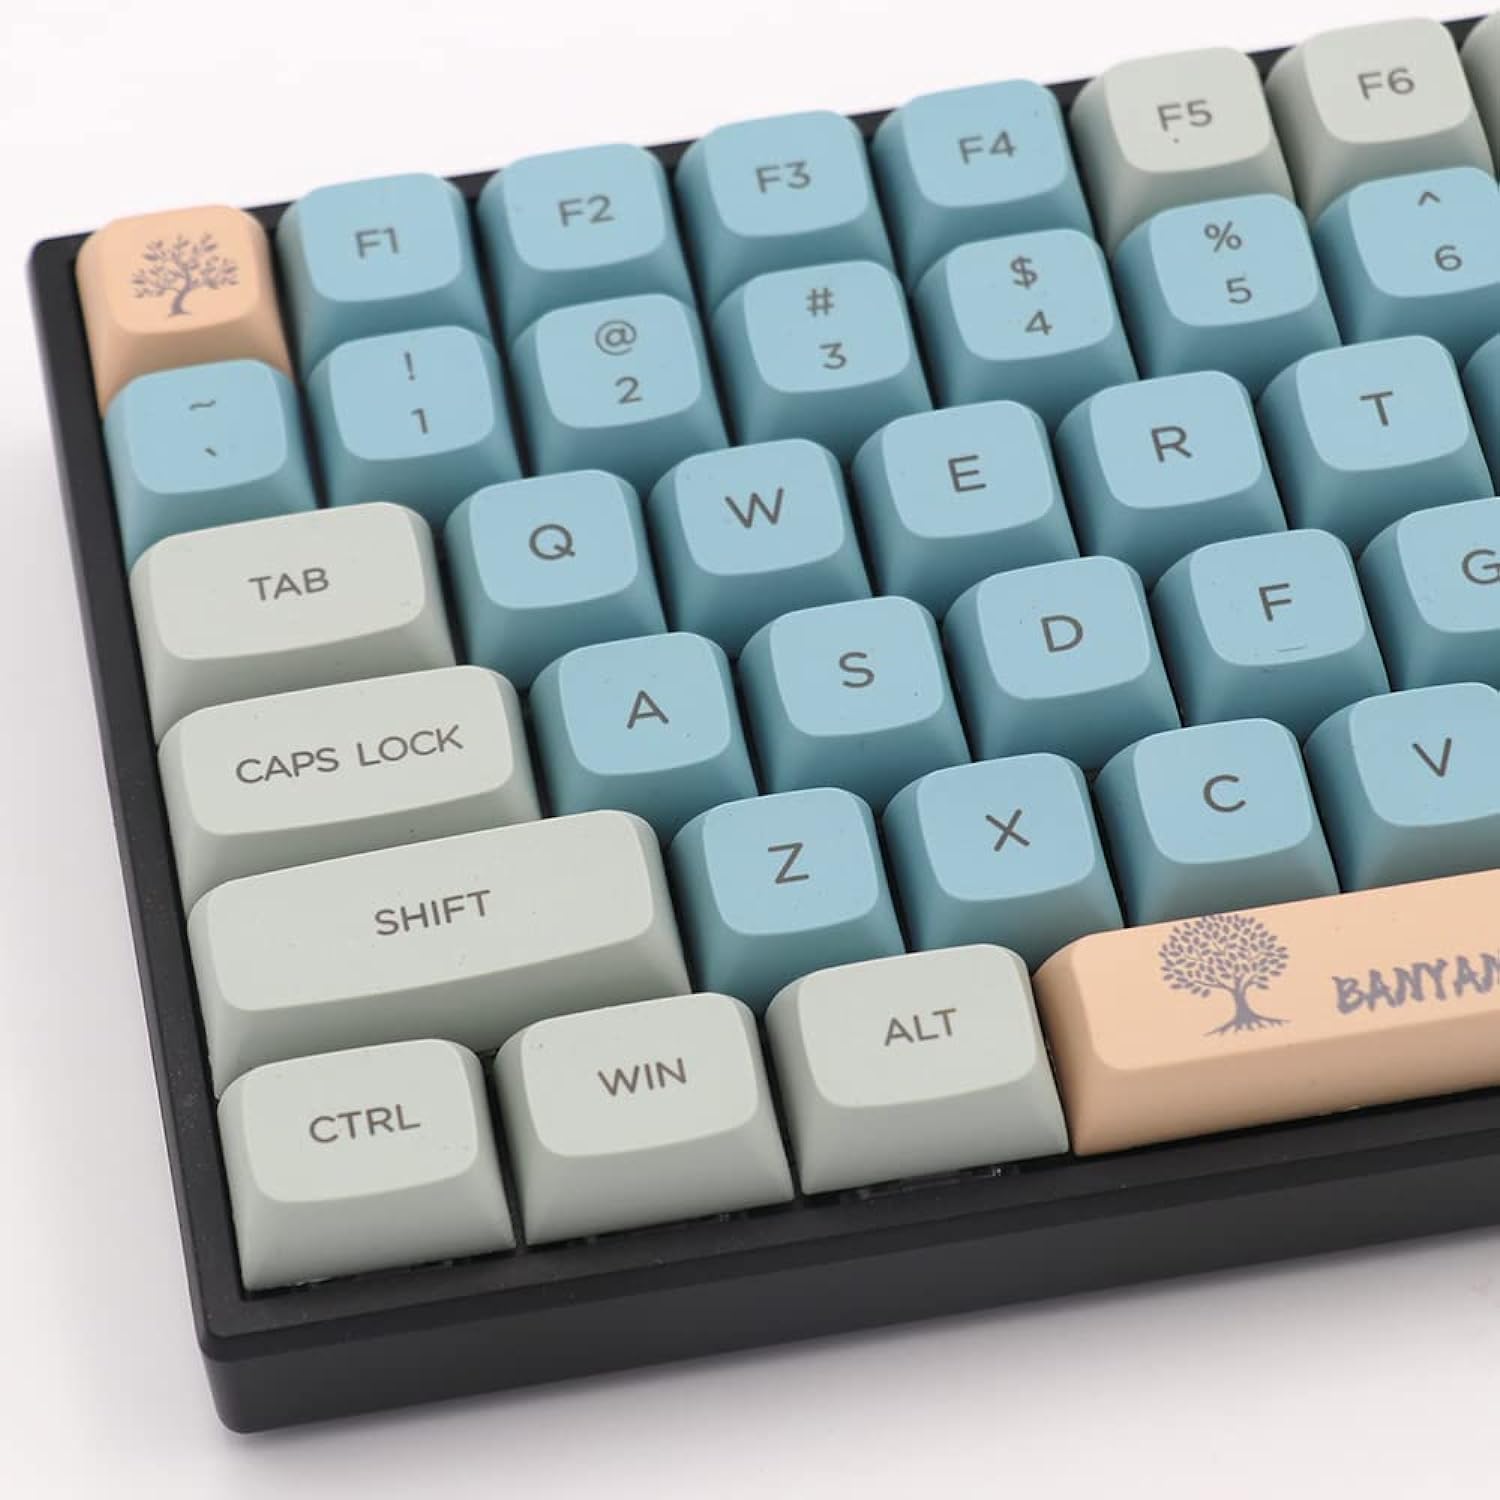 thinkstar Banyan Theme Kg1 Profile Keycaps-Thermal Sublimation Pbt Keycap Set,For Mechanical Keyboards, Full Set, English (Us) Layout